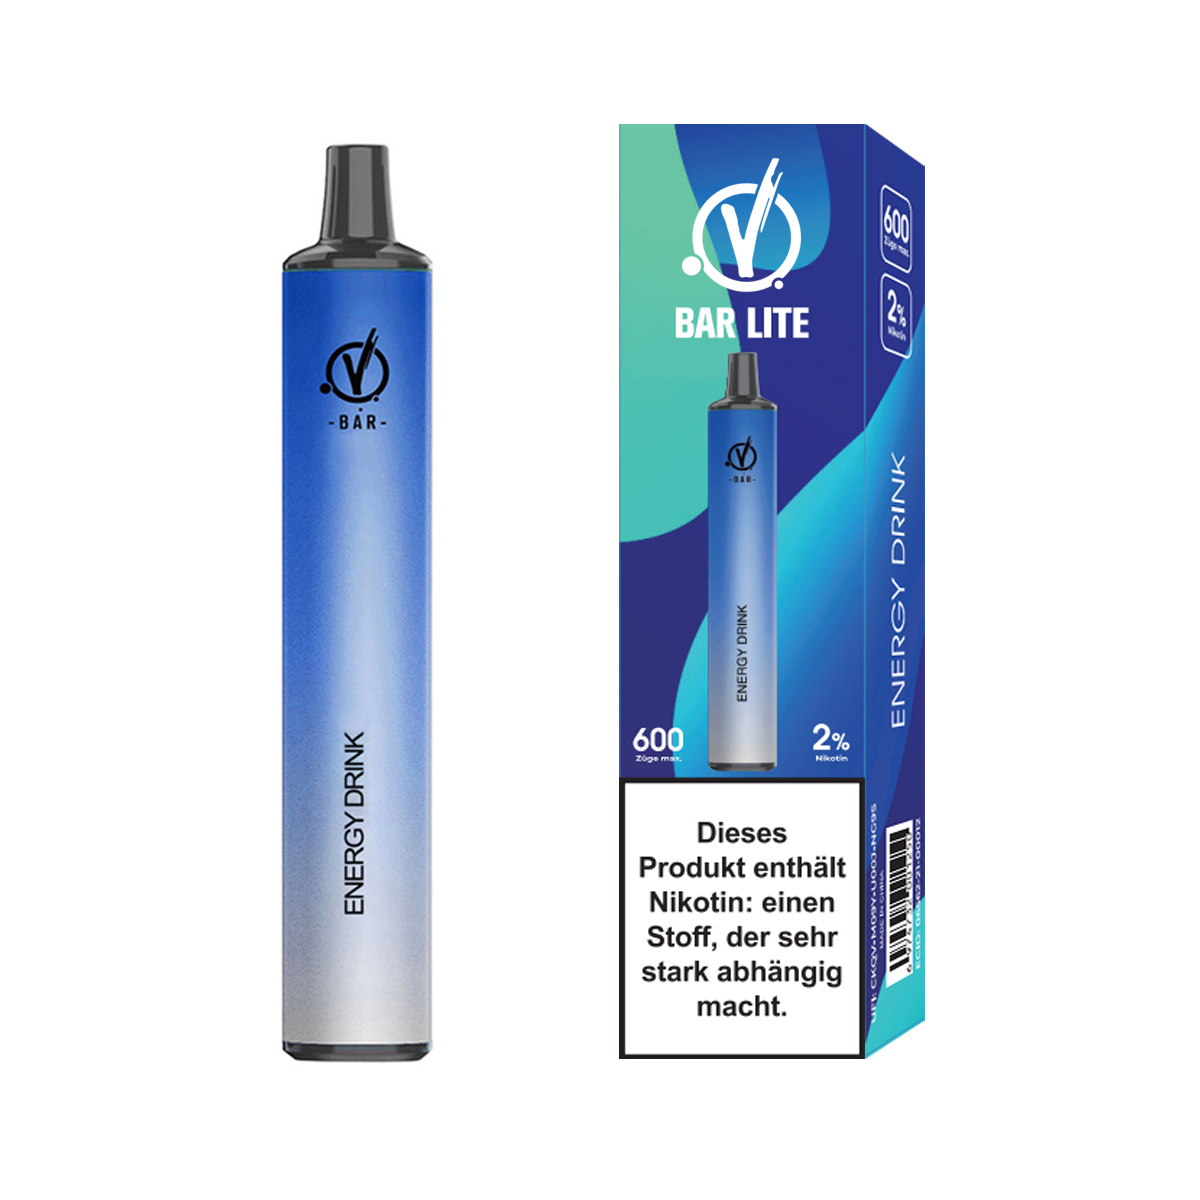 LINVO Bar Lite  Einweg E-Zigarette 20mg/ml bis 600 Züge  - Energy Drink ICE